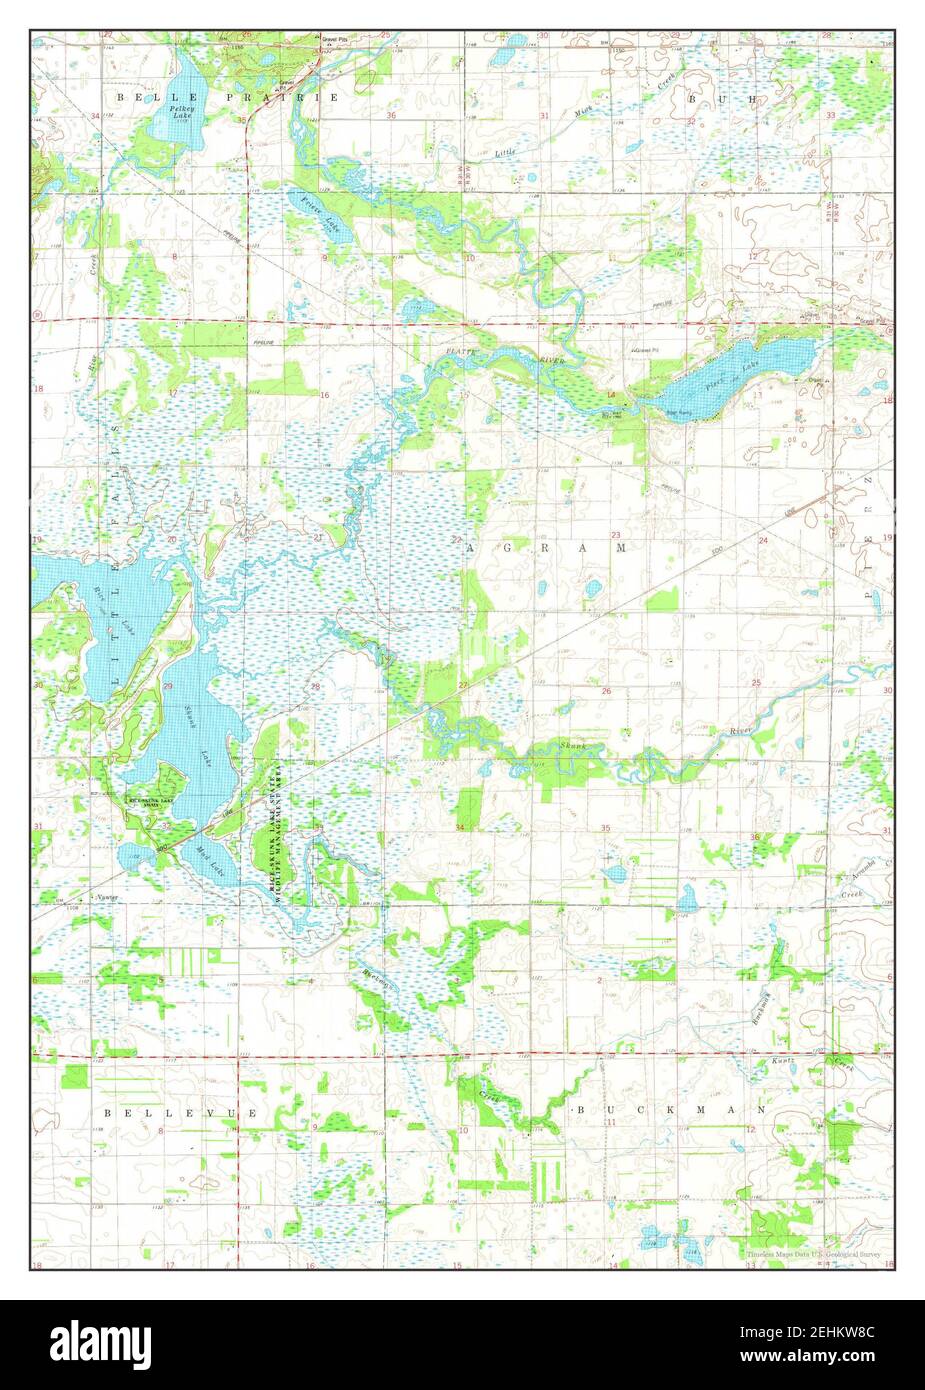 Pierz Lake, Minnesota, map 1978, 1:24000, United States of America by Timeless Maps, data U.S. Geological Survey Stock Photo